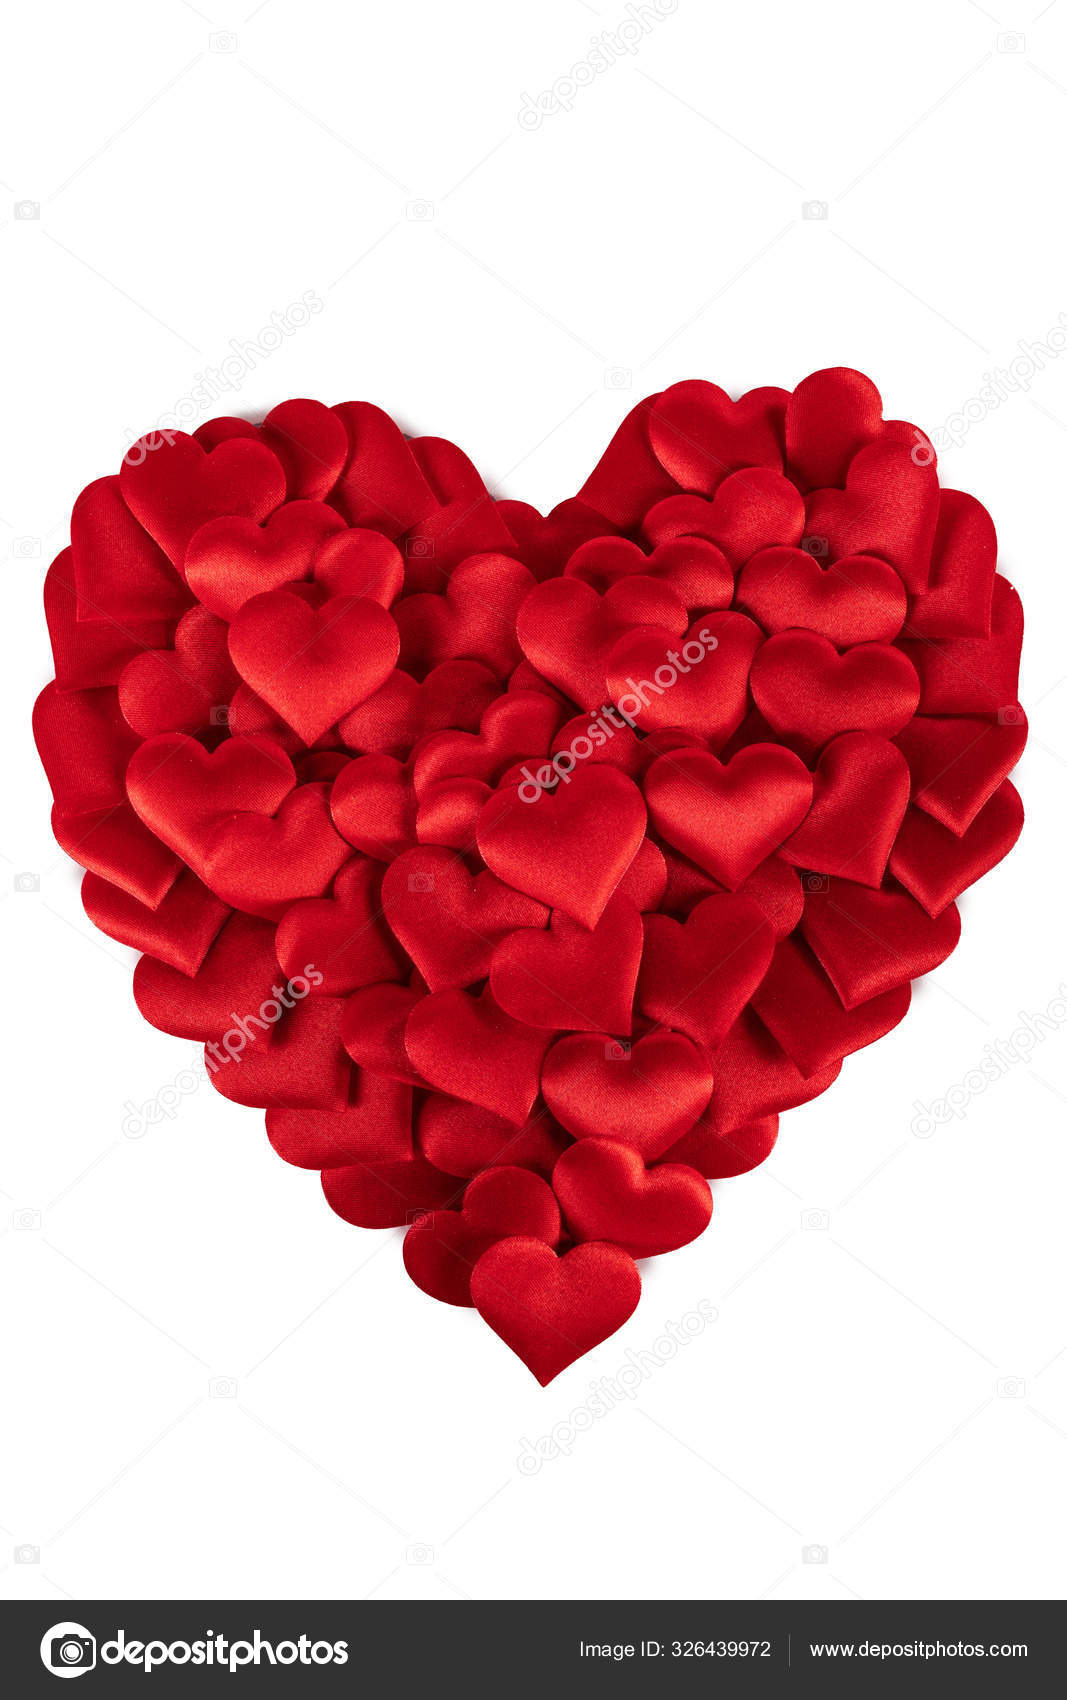 Hearts falling background - Valentine heart confetti for